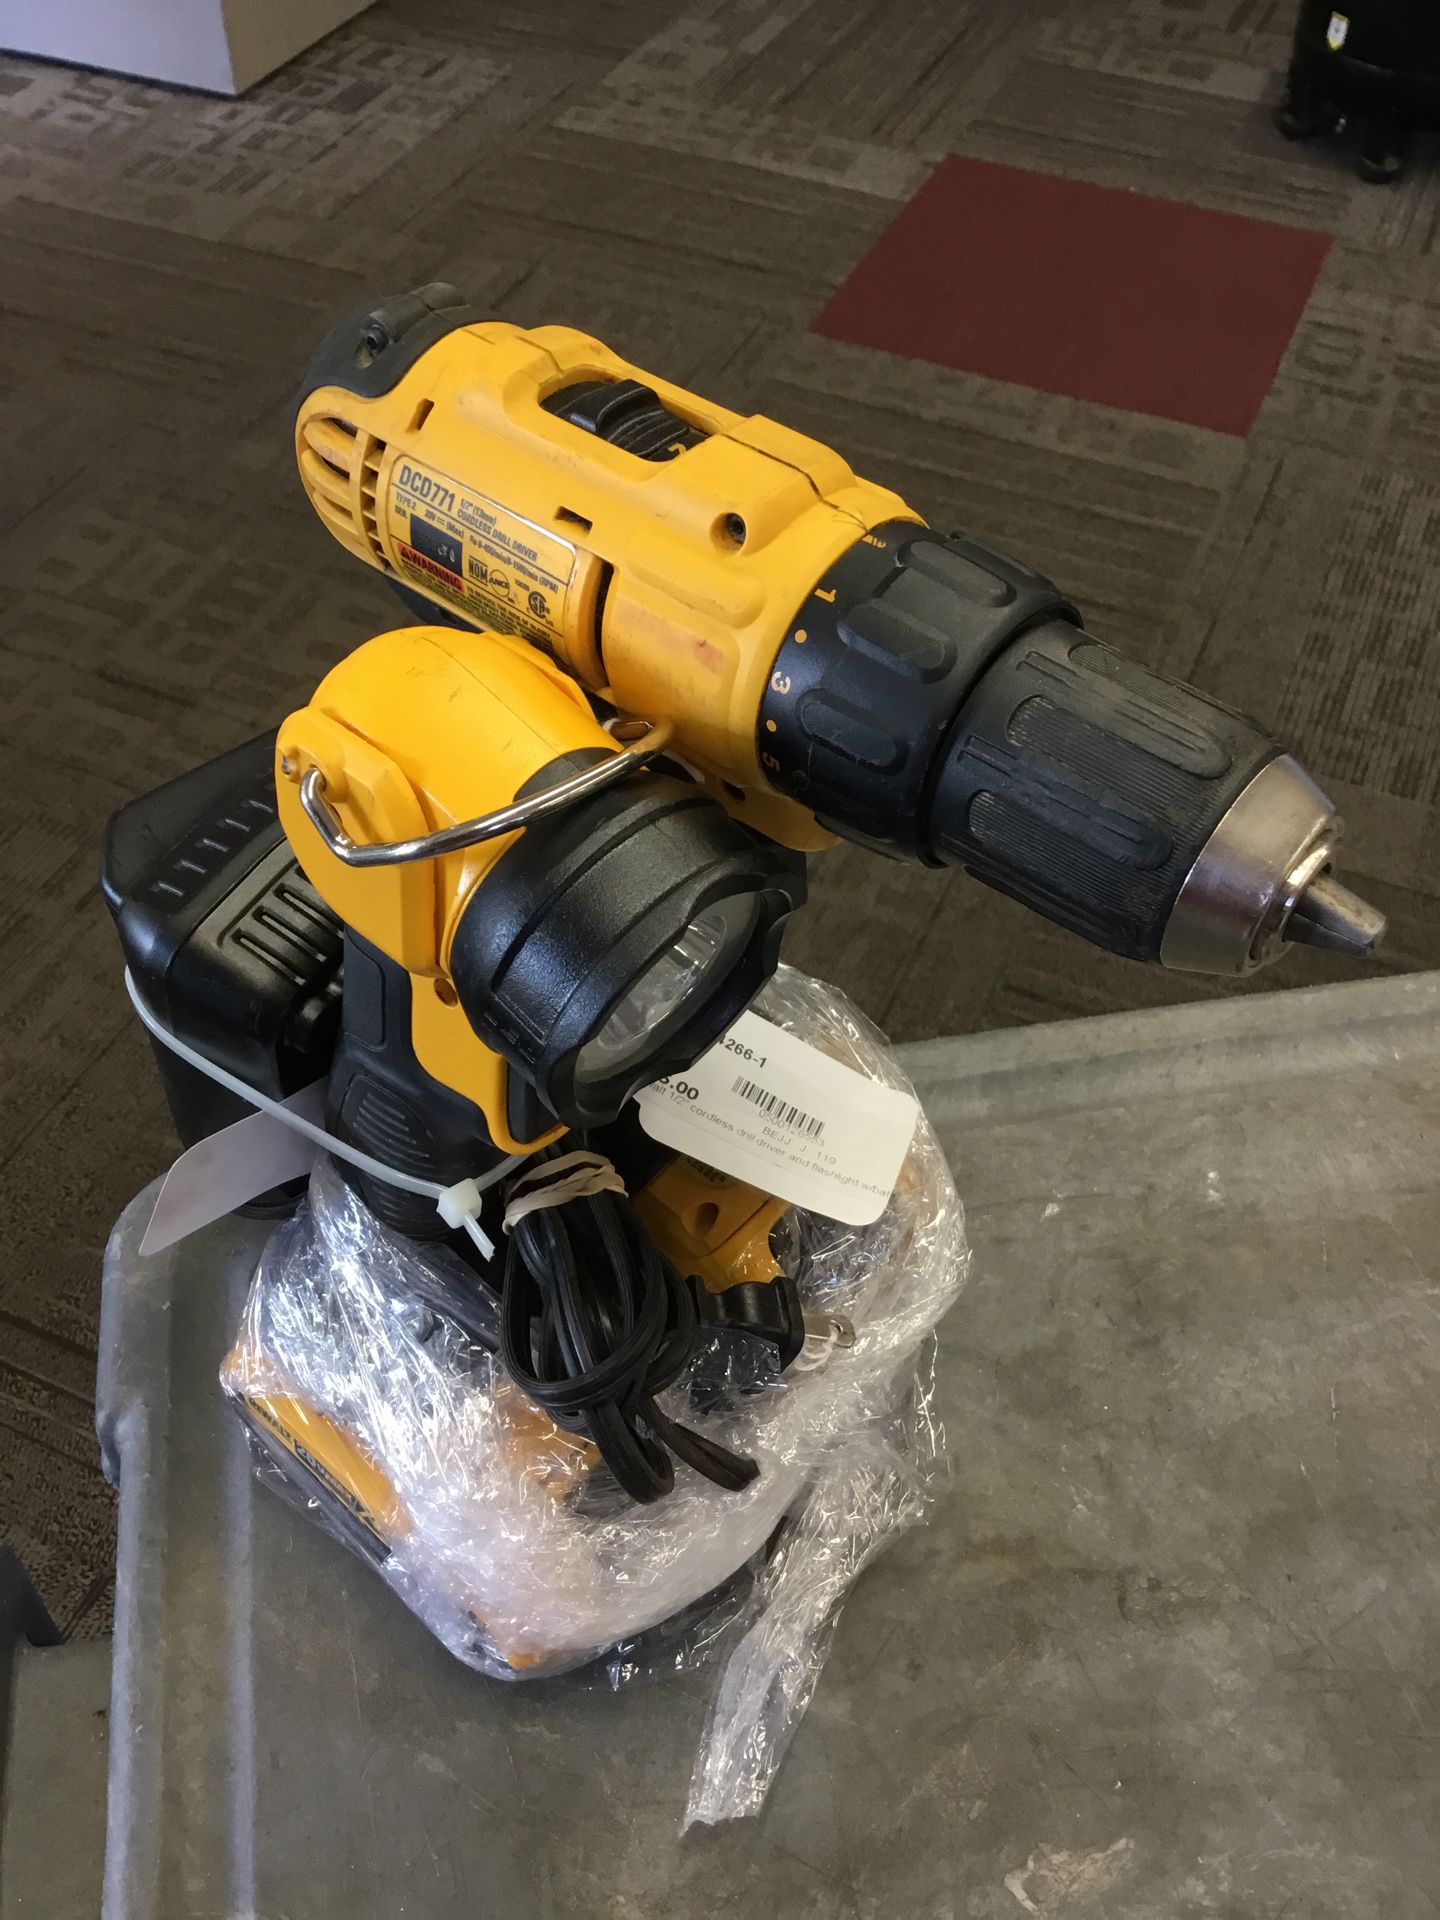 Dewalt 1/2”cordless drill driver and flashlight